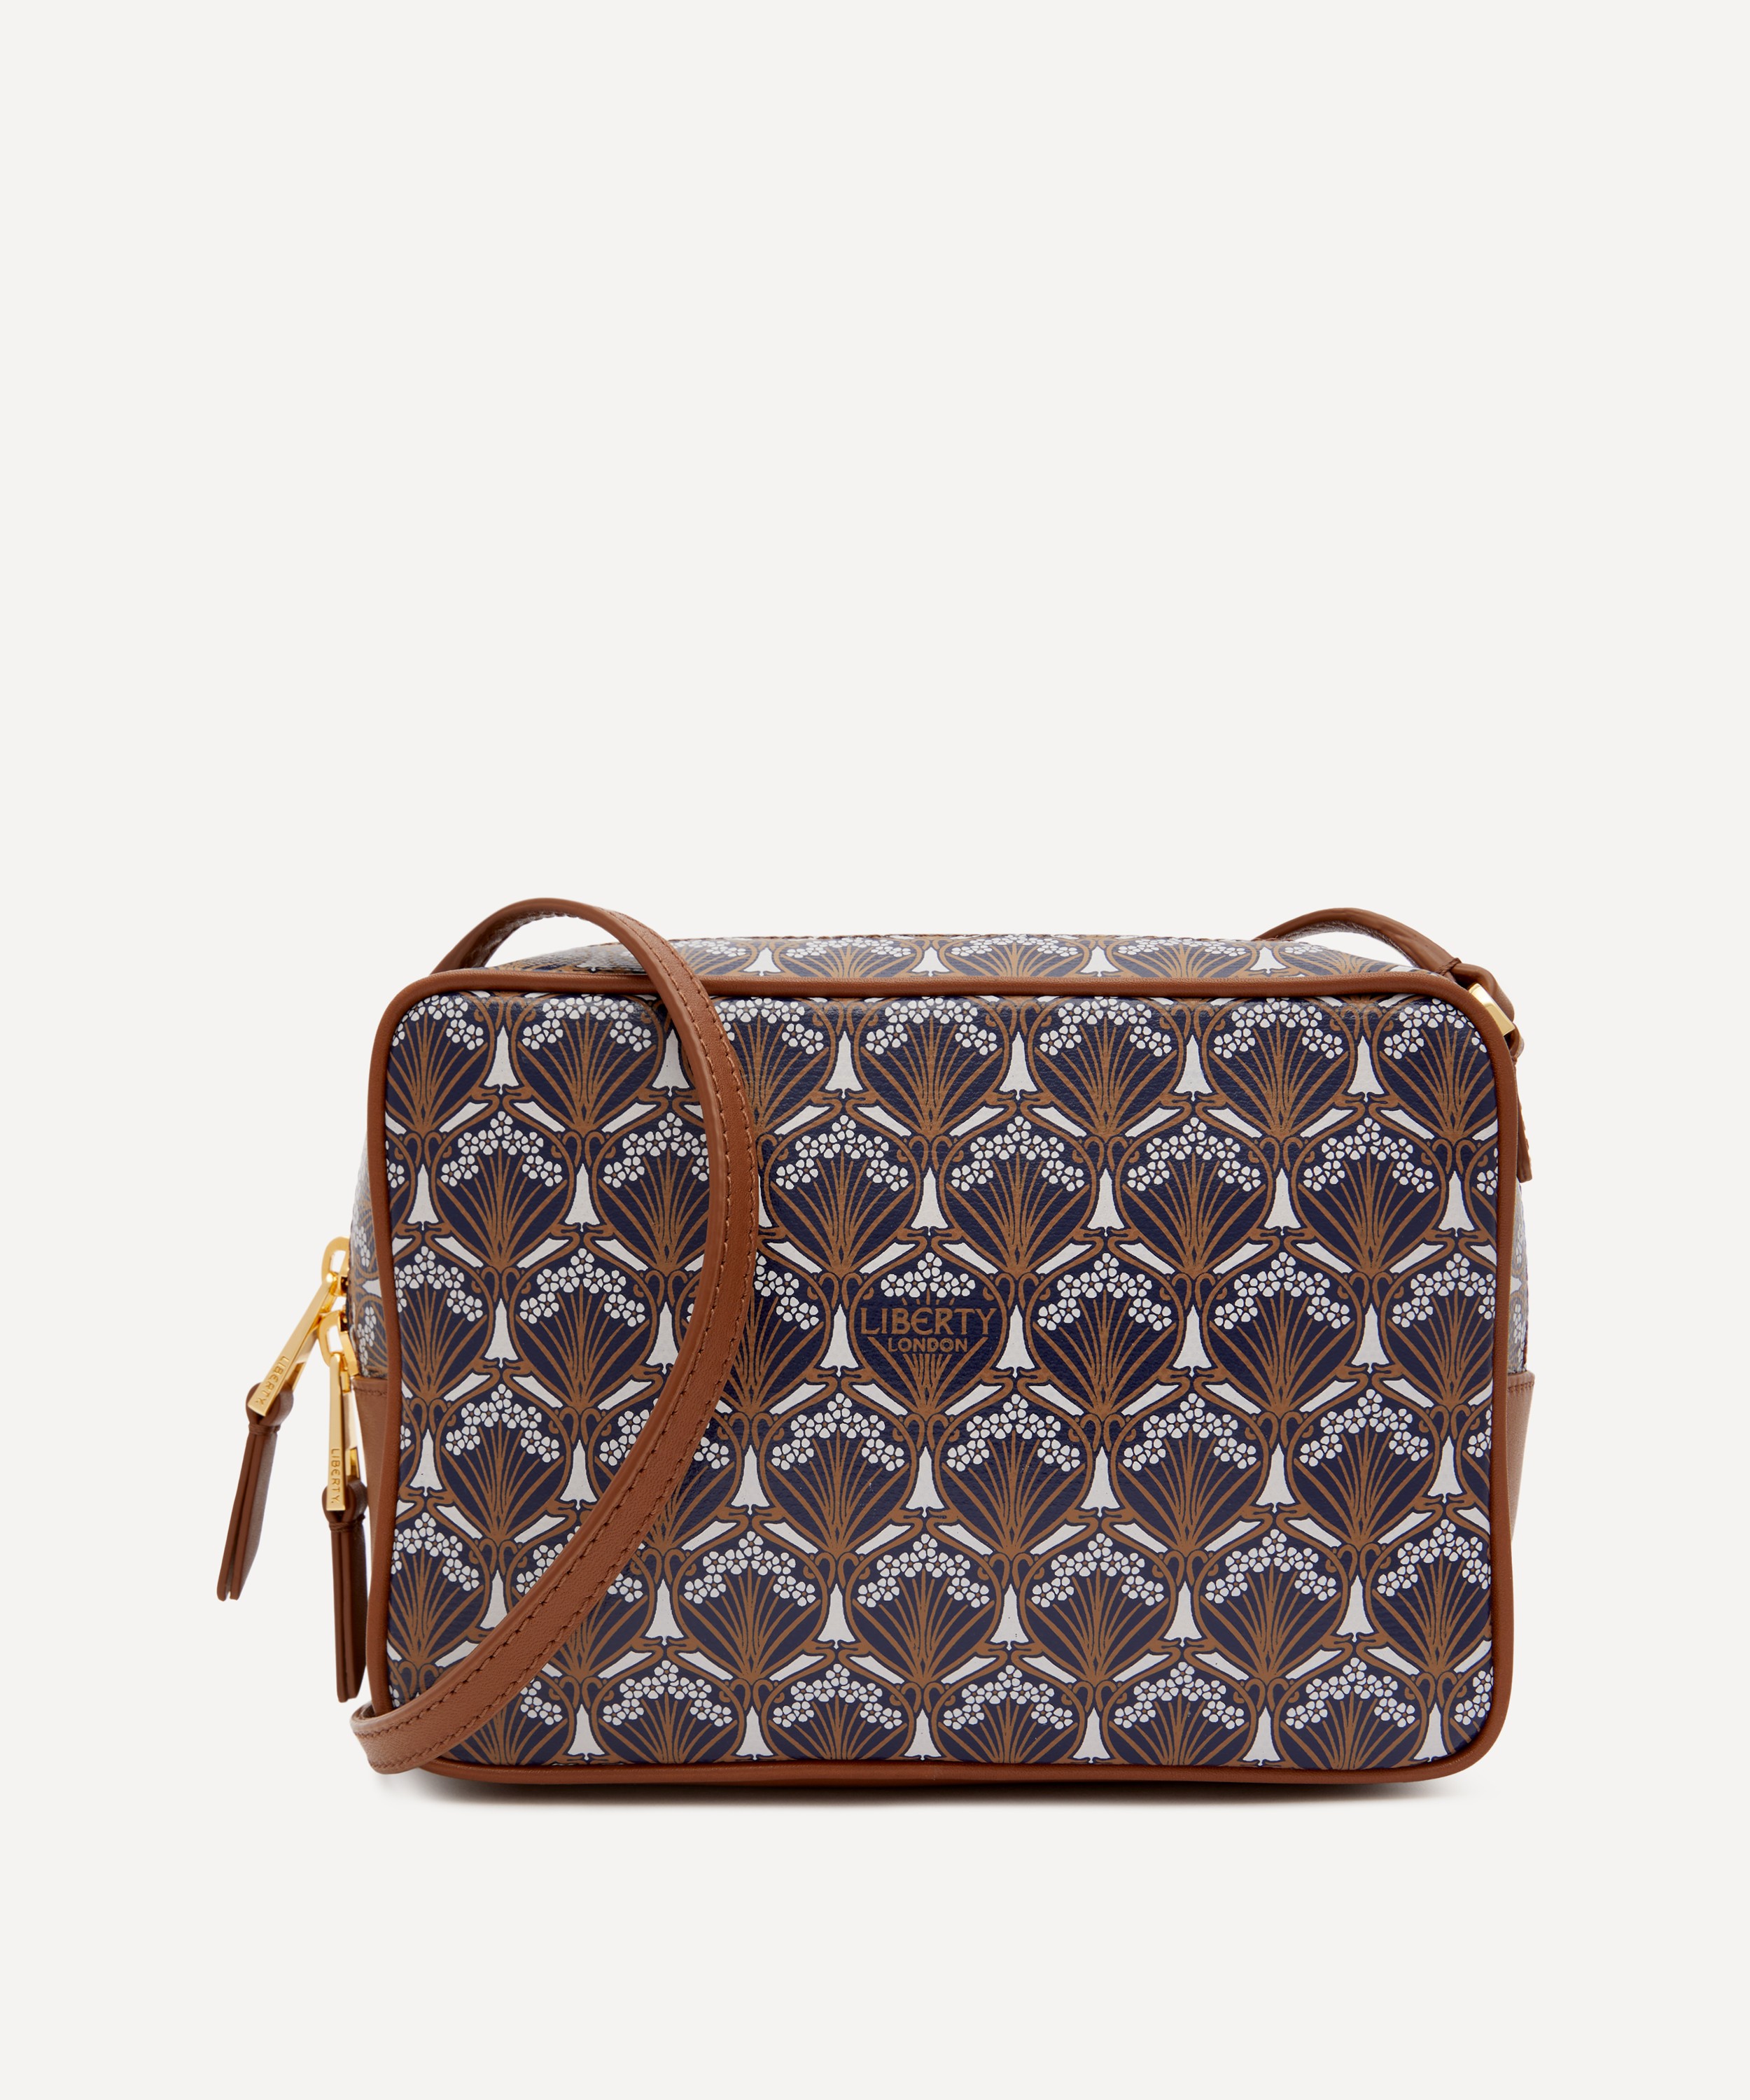 Louis Vuitton's New Classic bags get A-List treatment - Duty Free